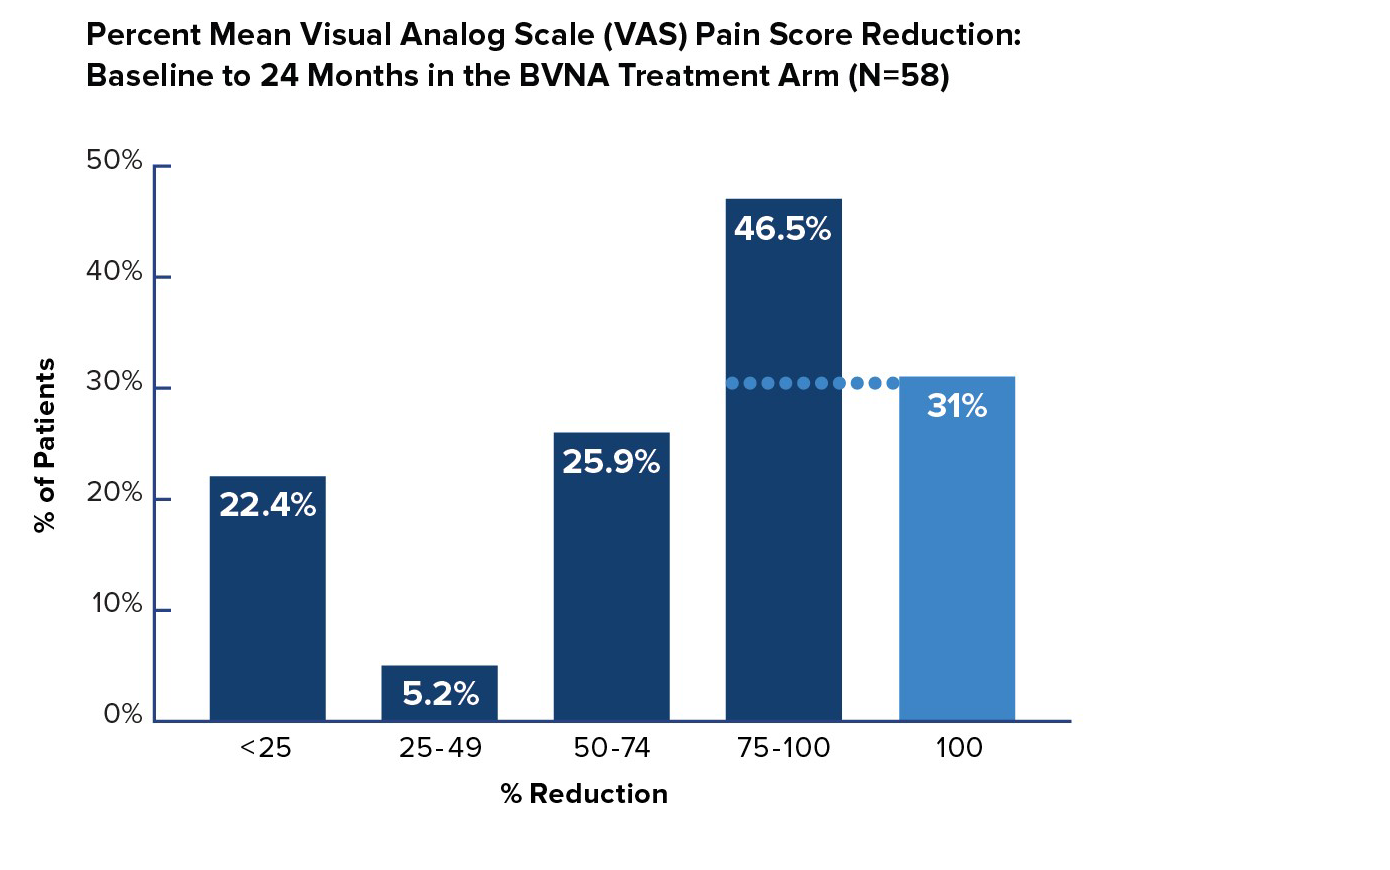 Percent Mean visual analog scale (VAS) pain score reduction